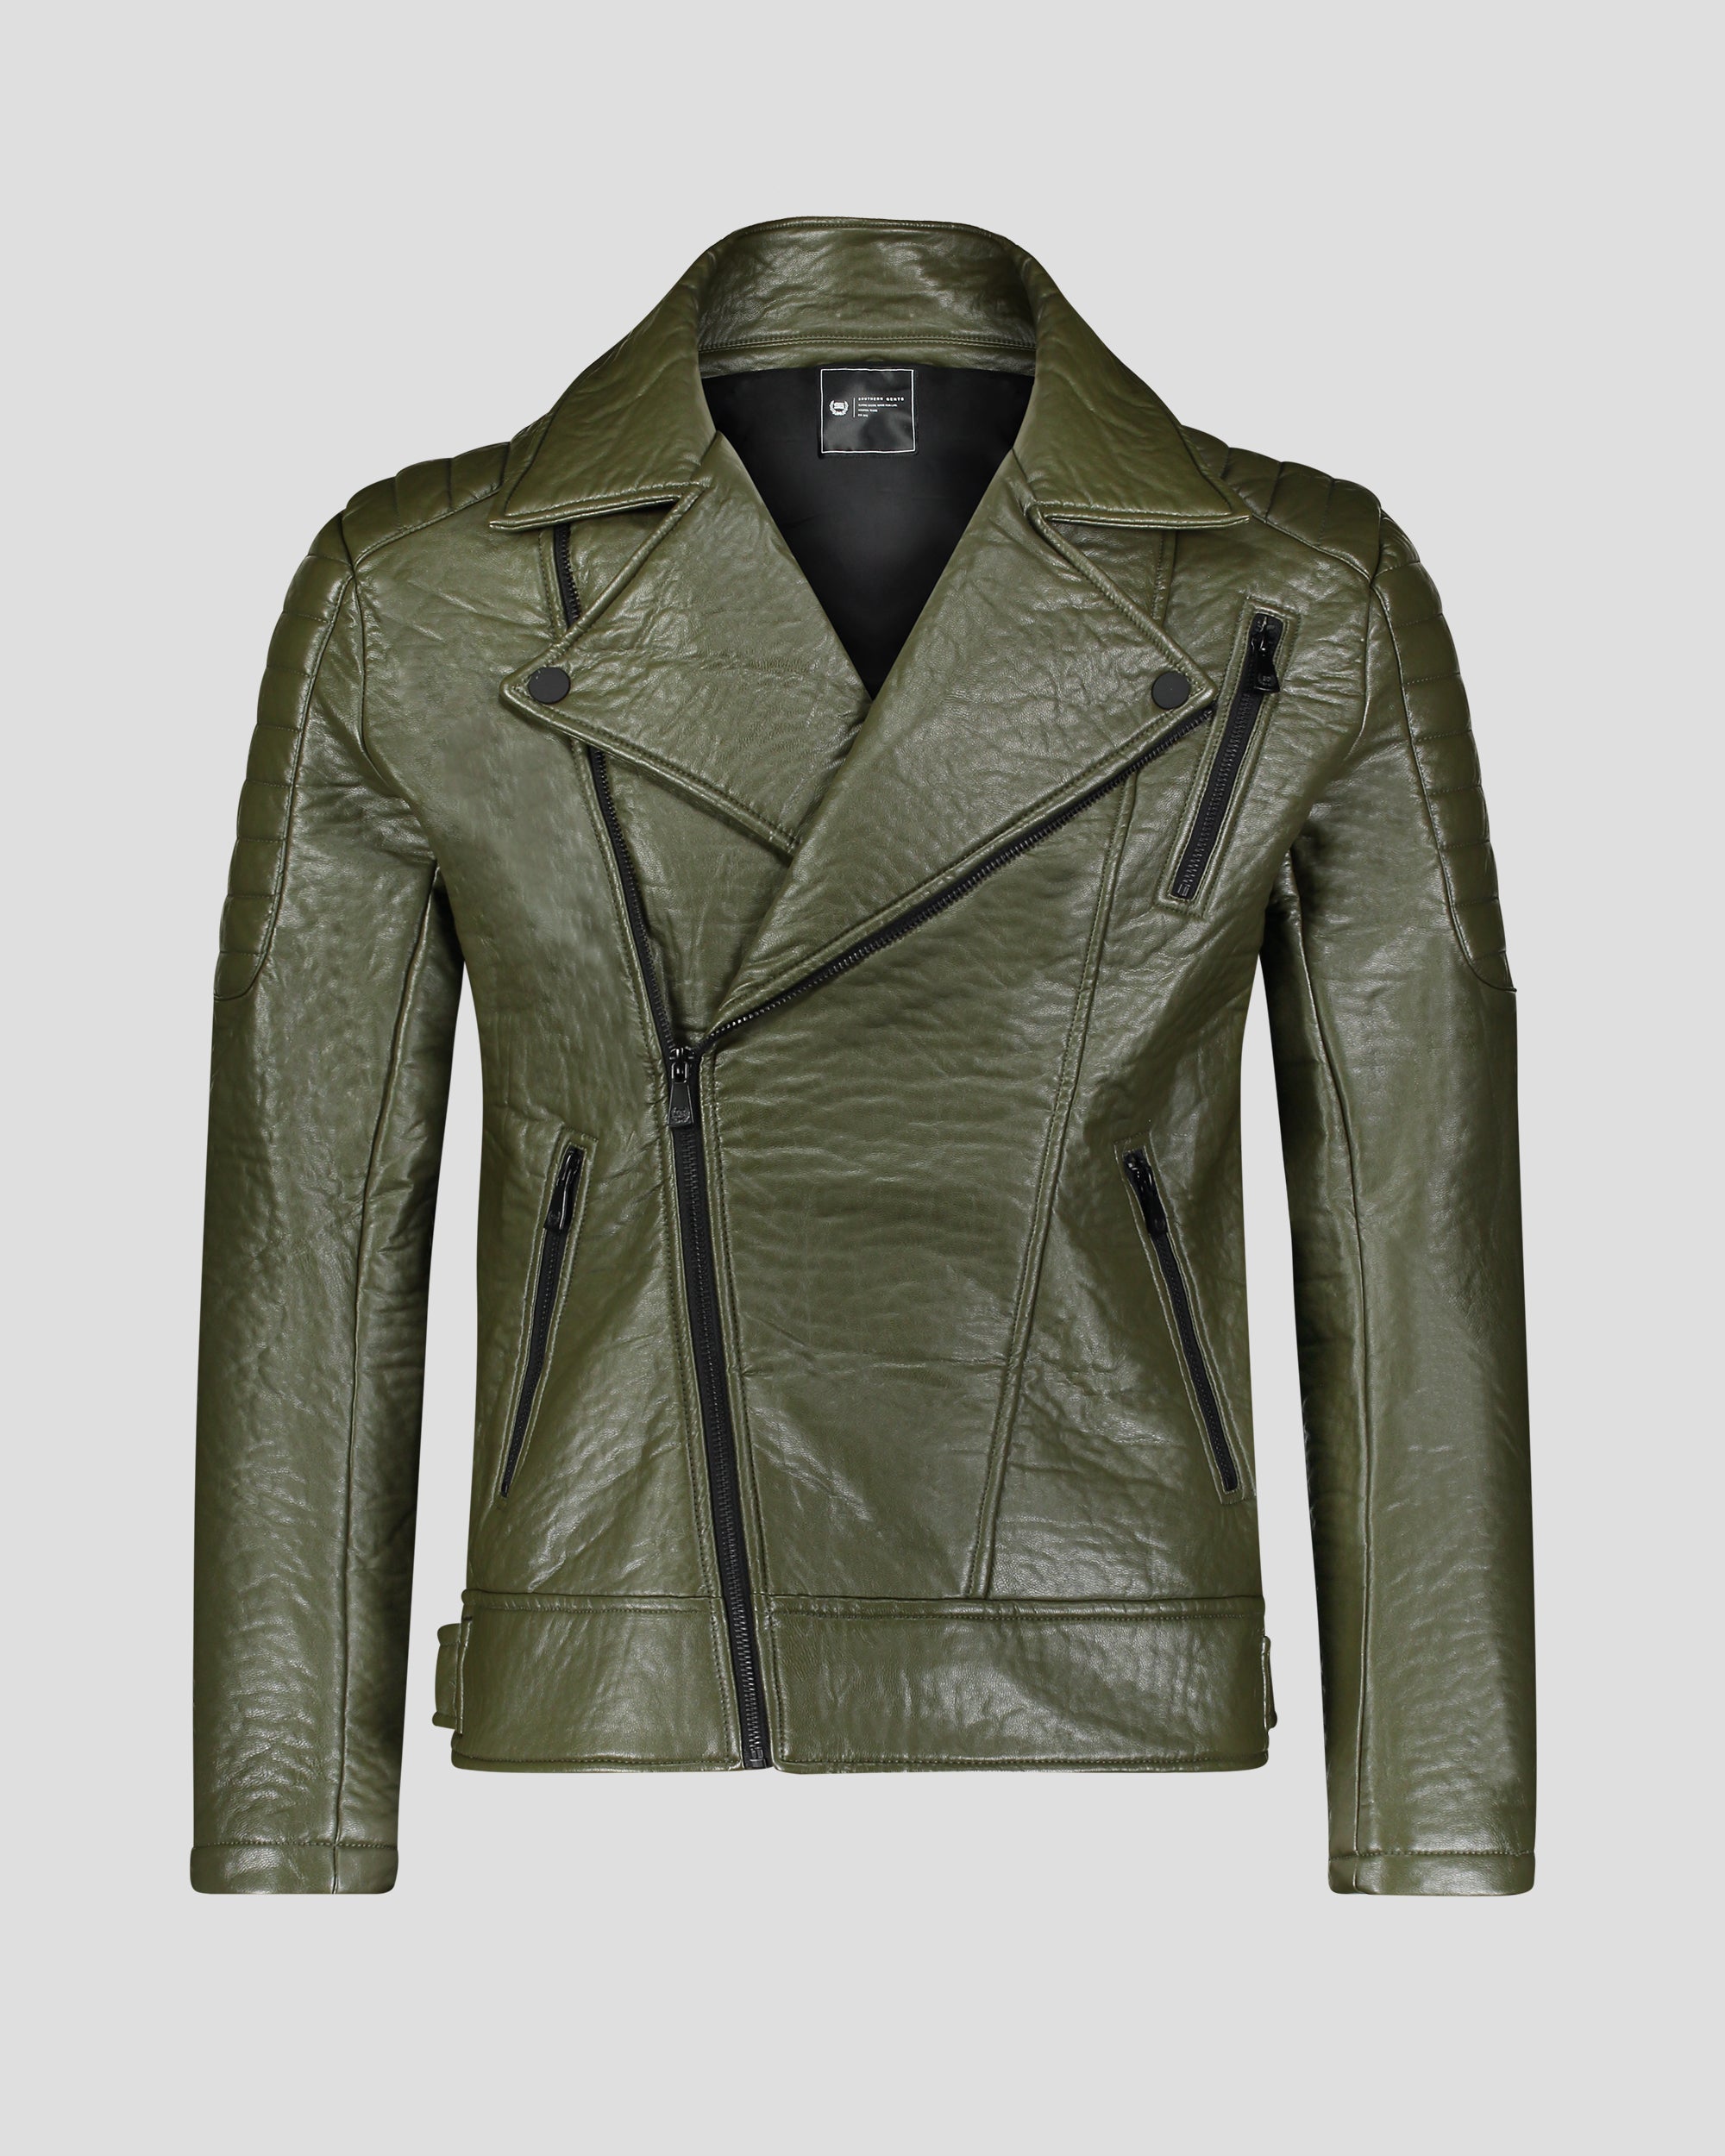 Men's Jacket Casual Denim Biker Jacket Coat Slim Fit Multi Pocket Top